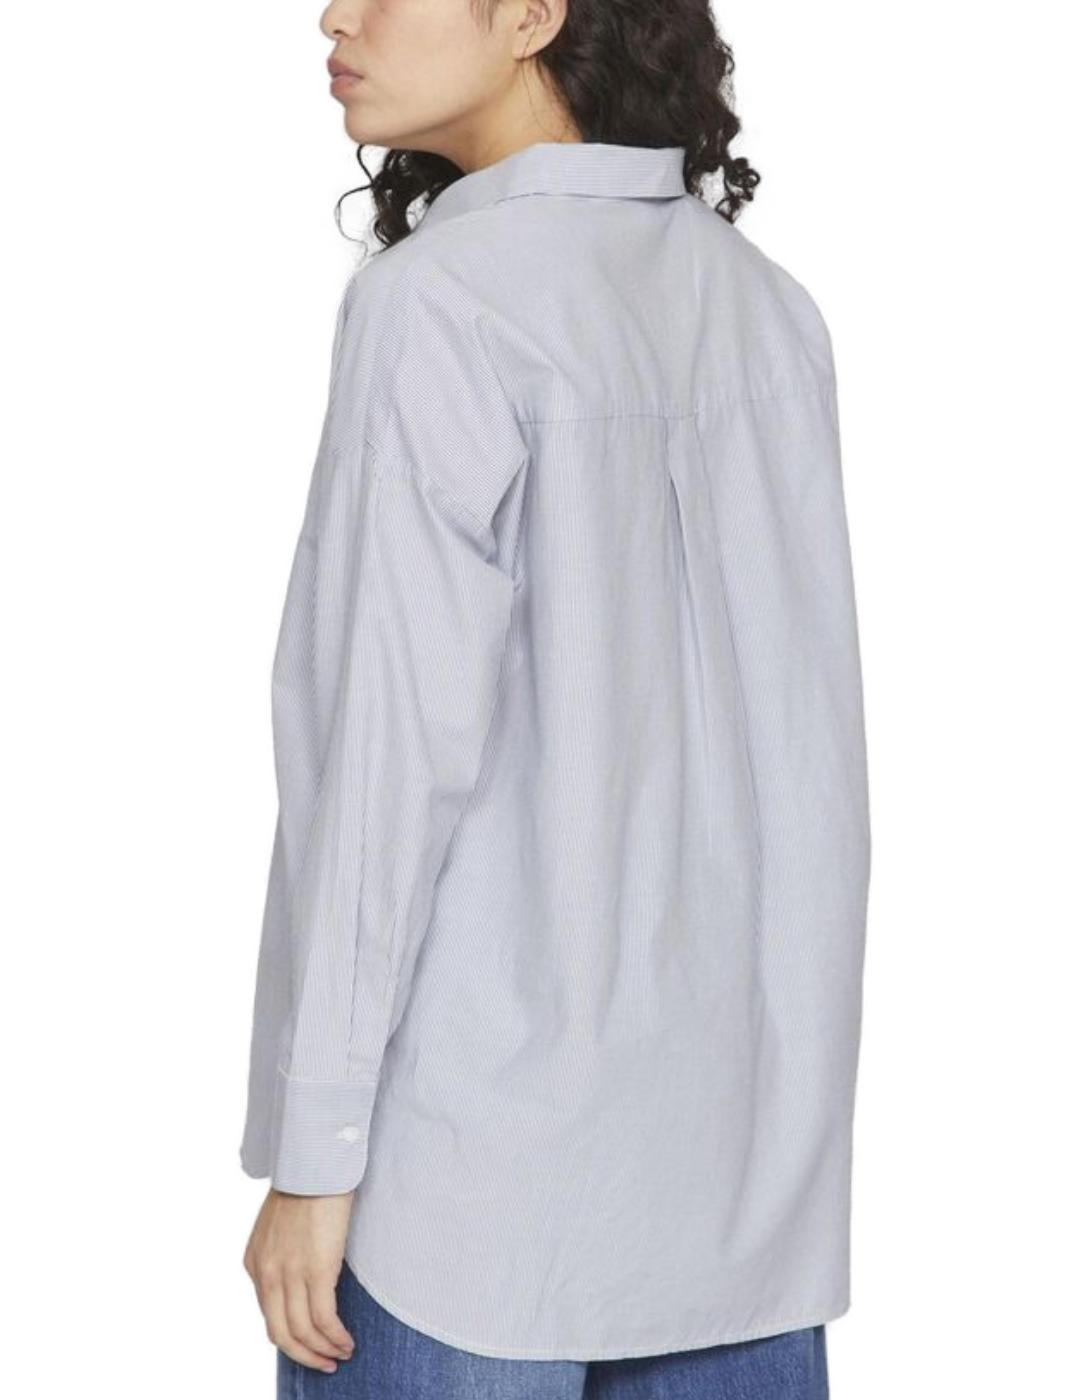 Camisa Vila Darma celeste raya blanca regular para mujer